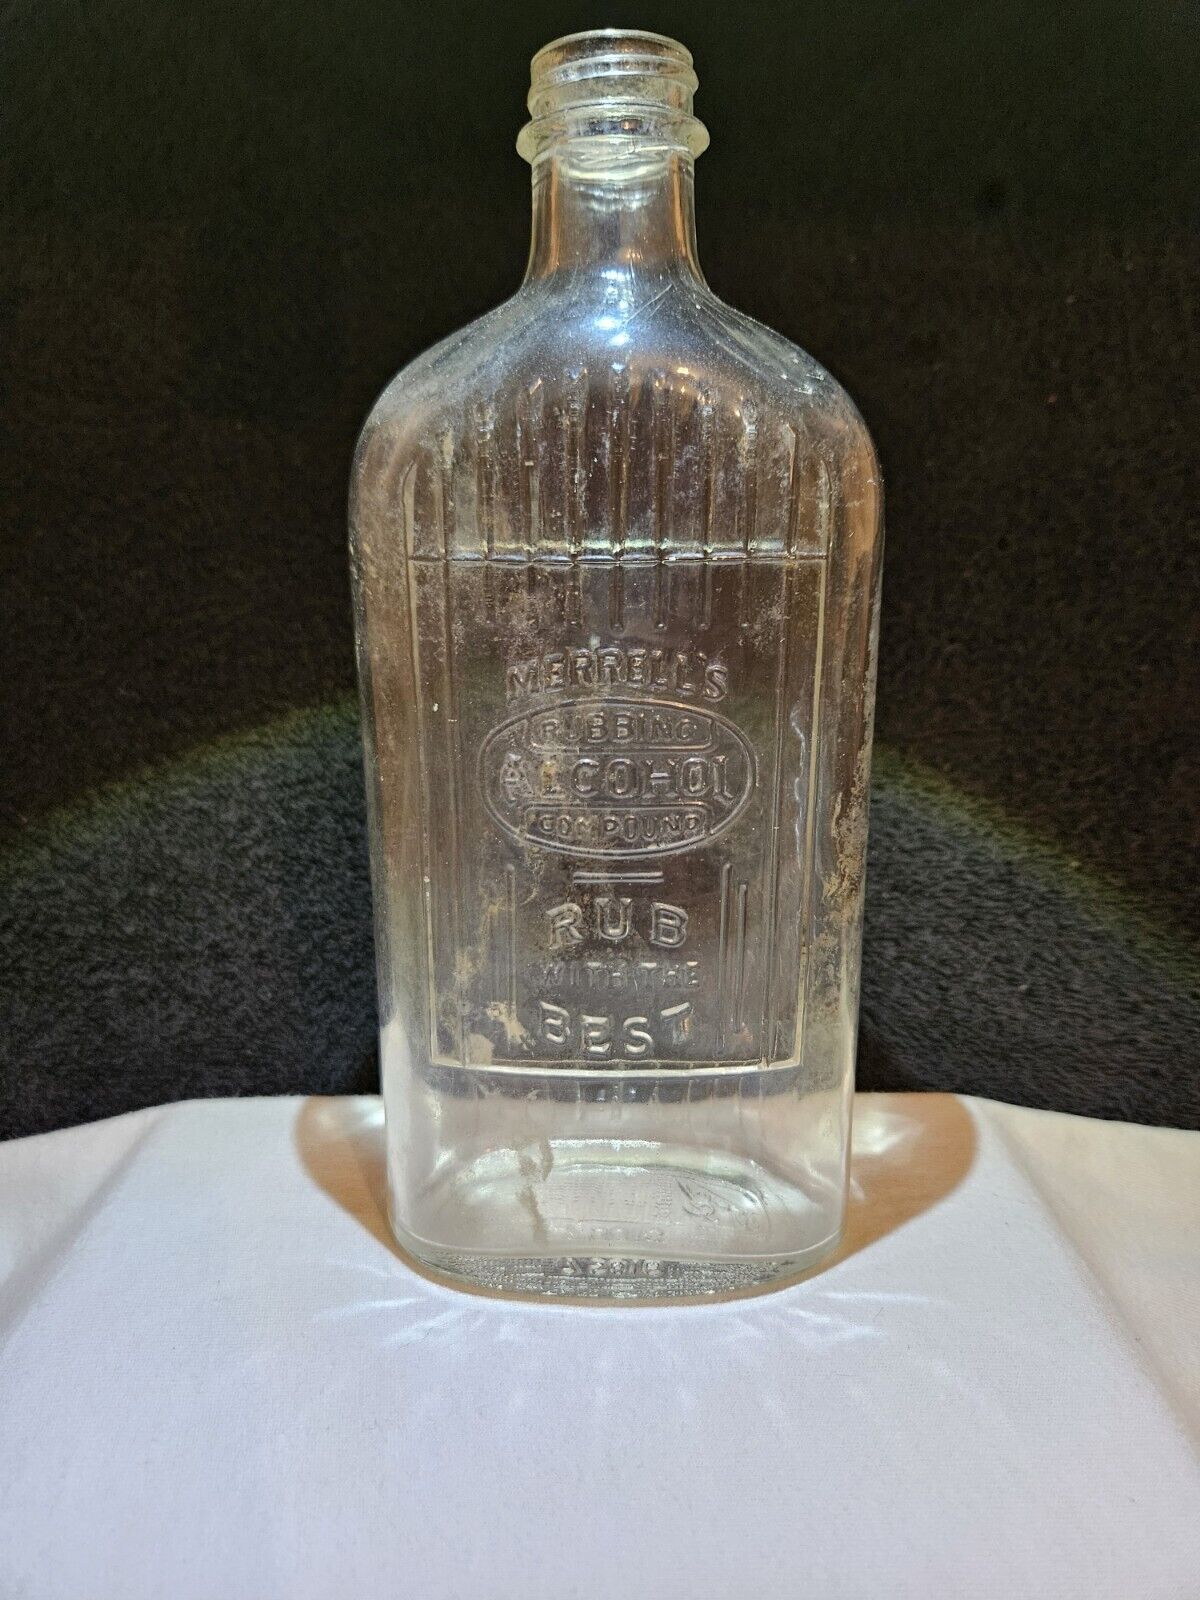 Vintage Merrells Rubbing Alchole Compound (Rub With The Best) Bottle Medicine 